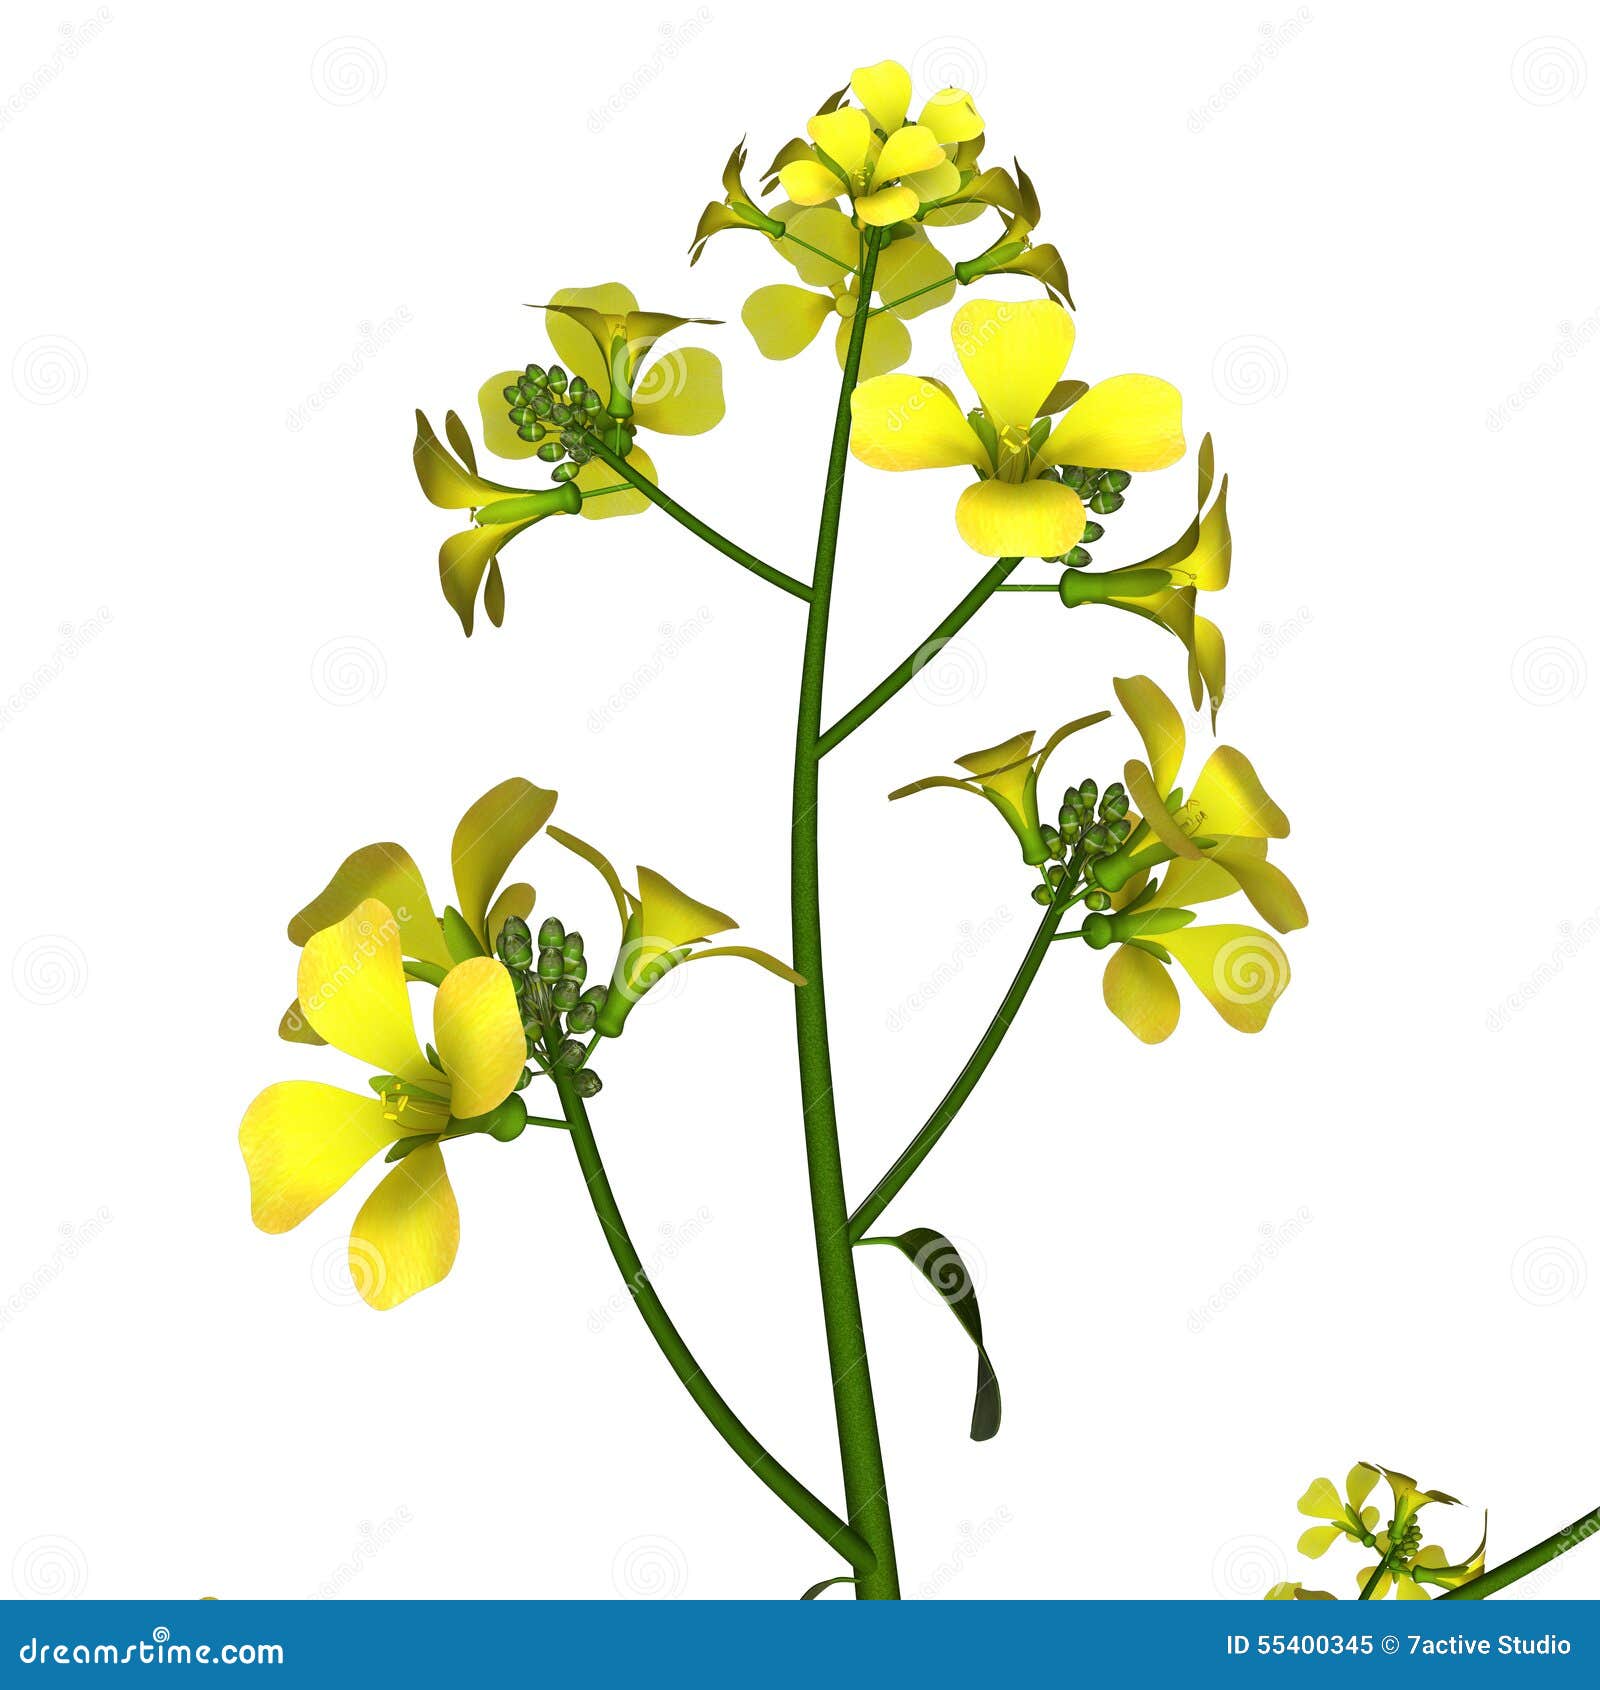 mustard-plant